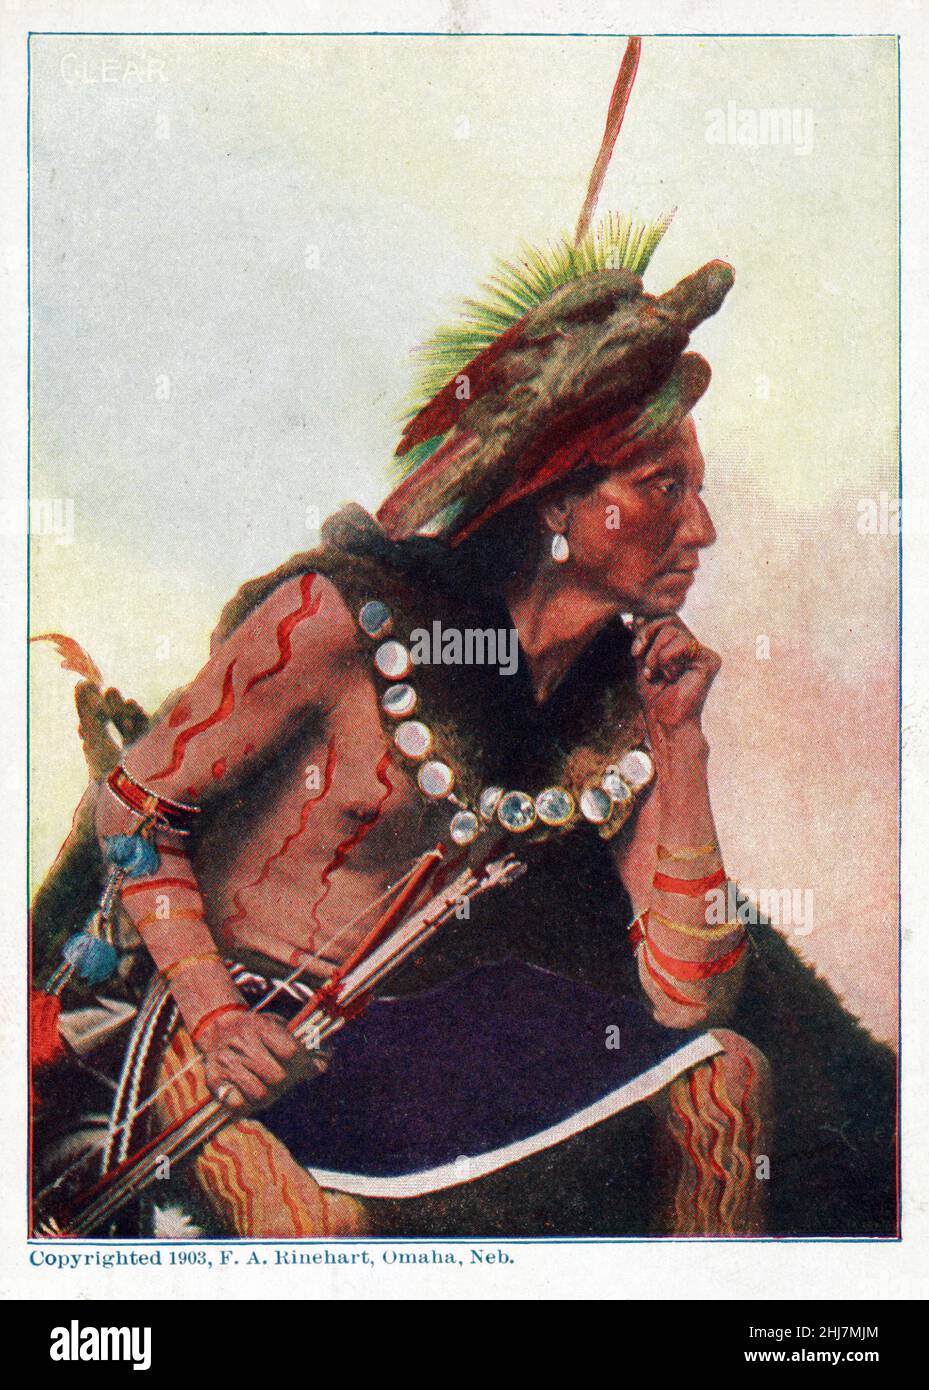 American Indian, seated, holding bow and arrow, wearing body paint and a bird headress, Omaha, Nebraska. Photo by F. A. Rinehart, 1903. Stock Photo